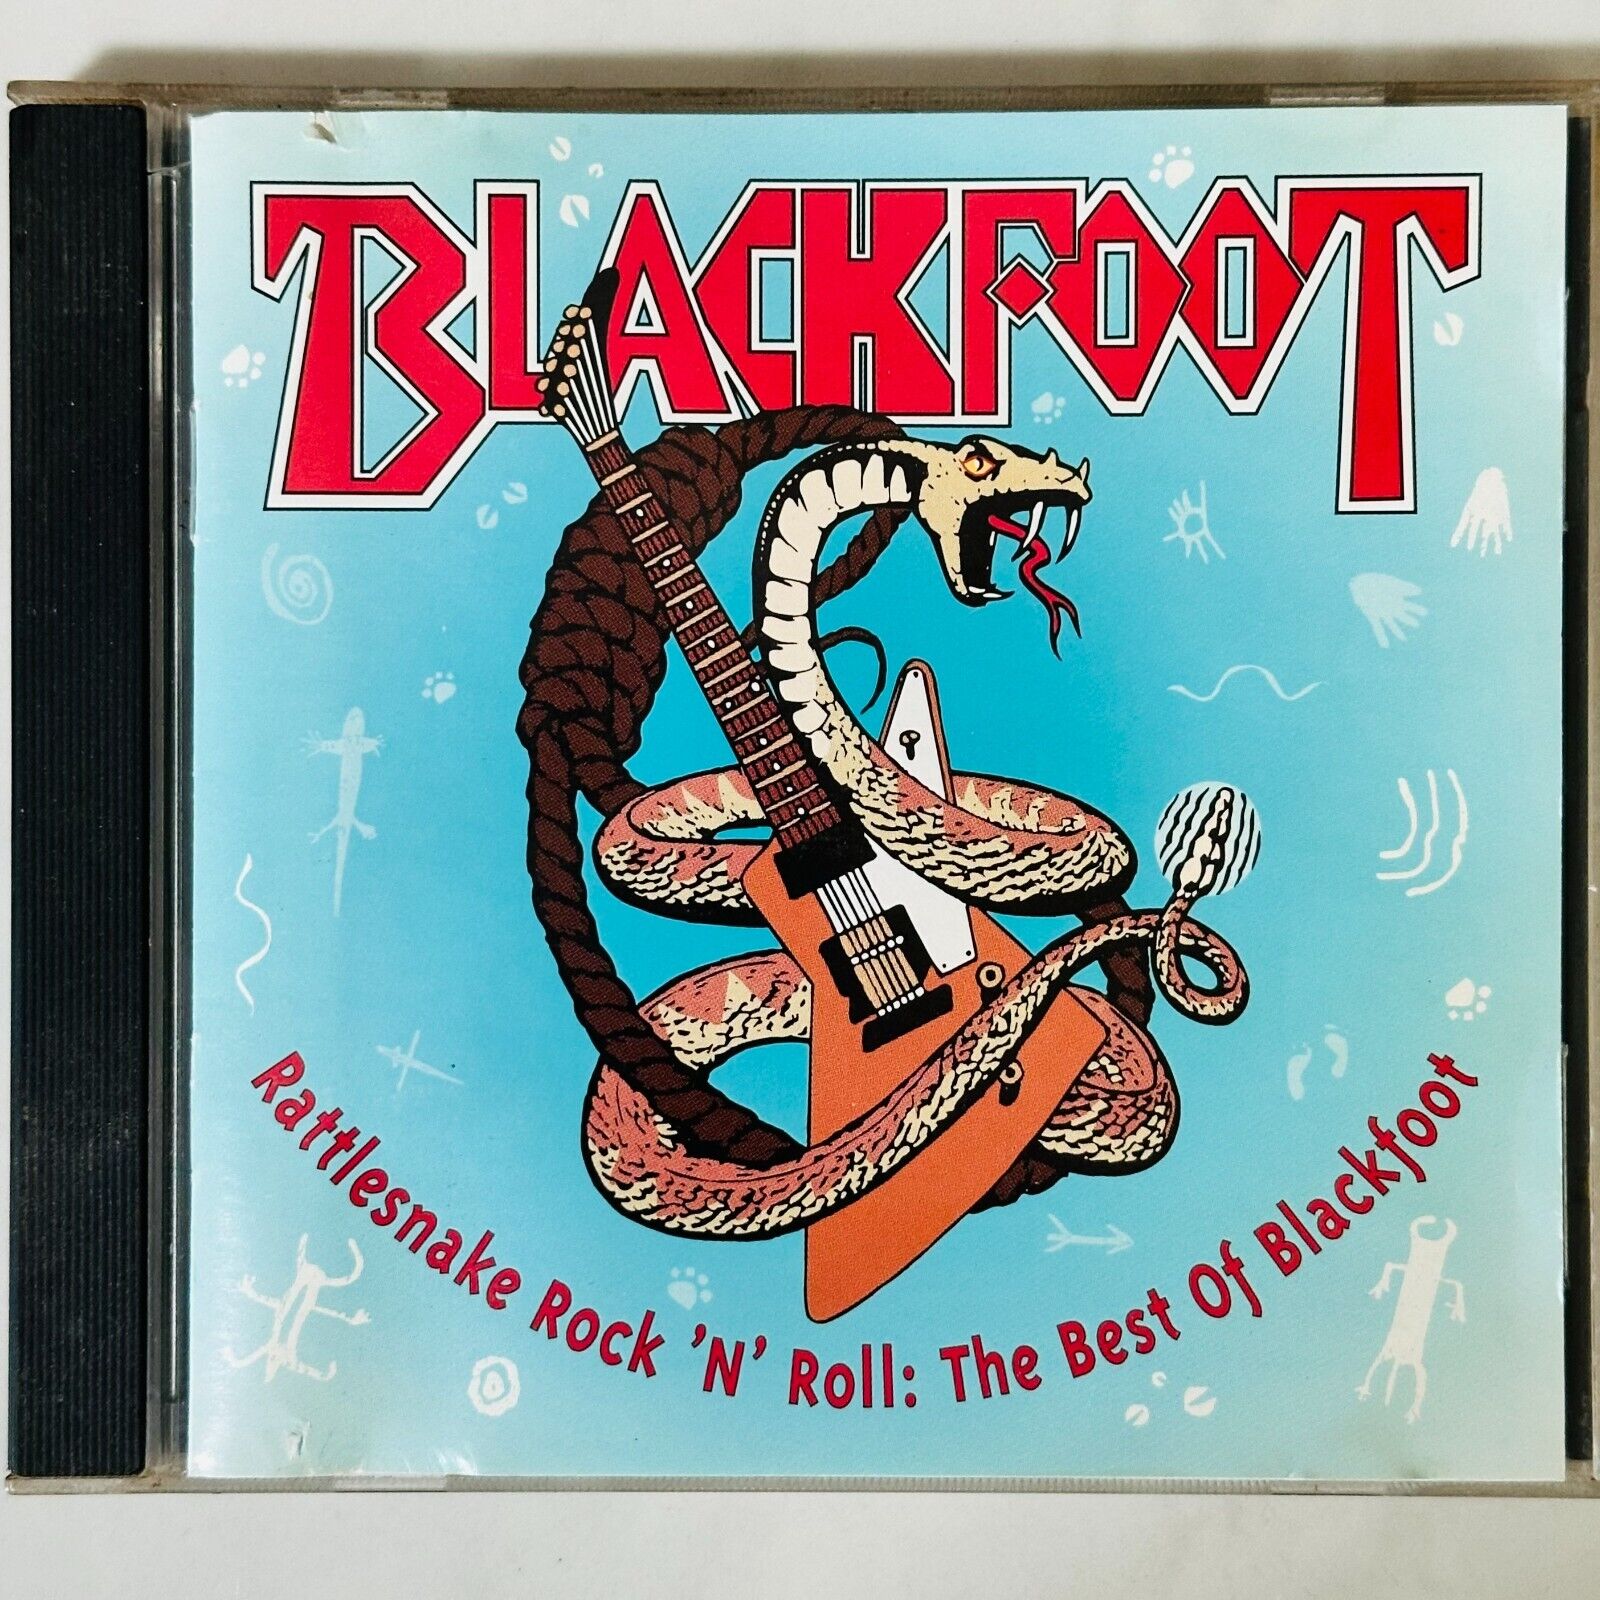 Blackfoot - CD - Rattlesnake Rock \'N\' Roll: The Best of Blackfoot